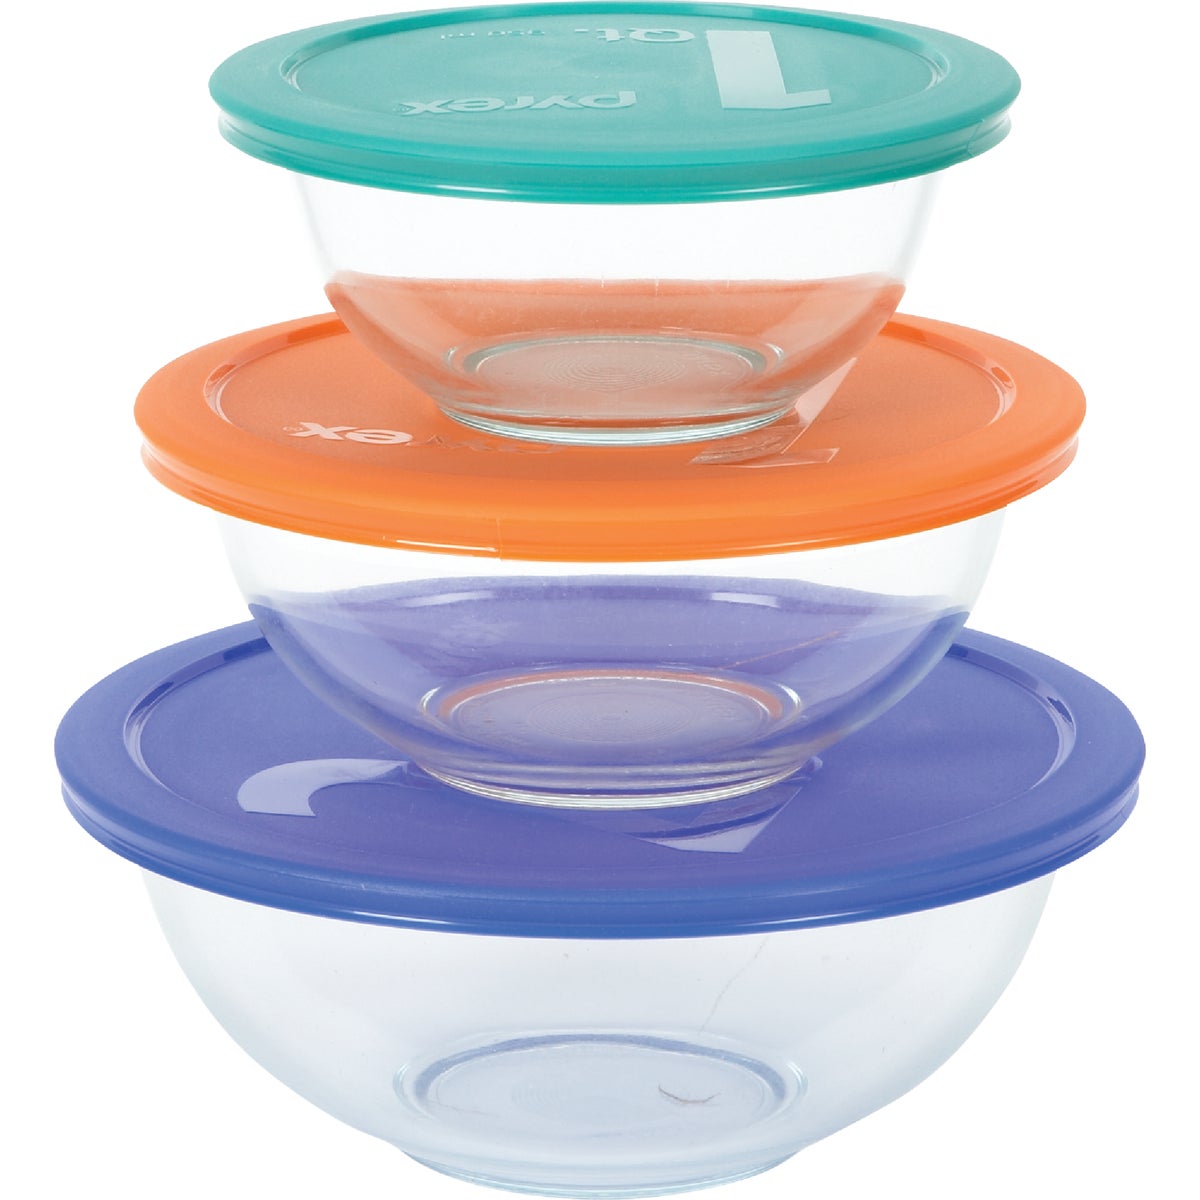 Pyrex Smart Essentials Covered Glass Pyrex Bowl Set (6-Piece)